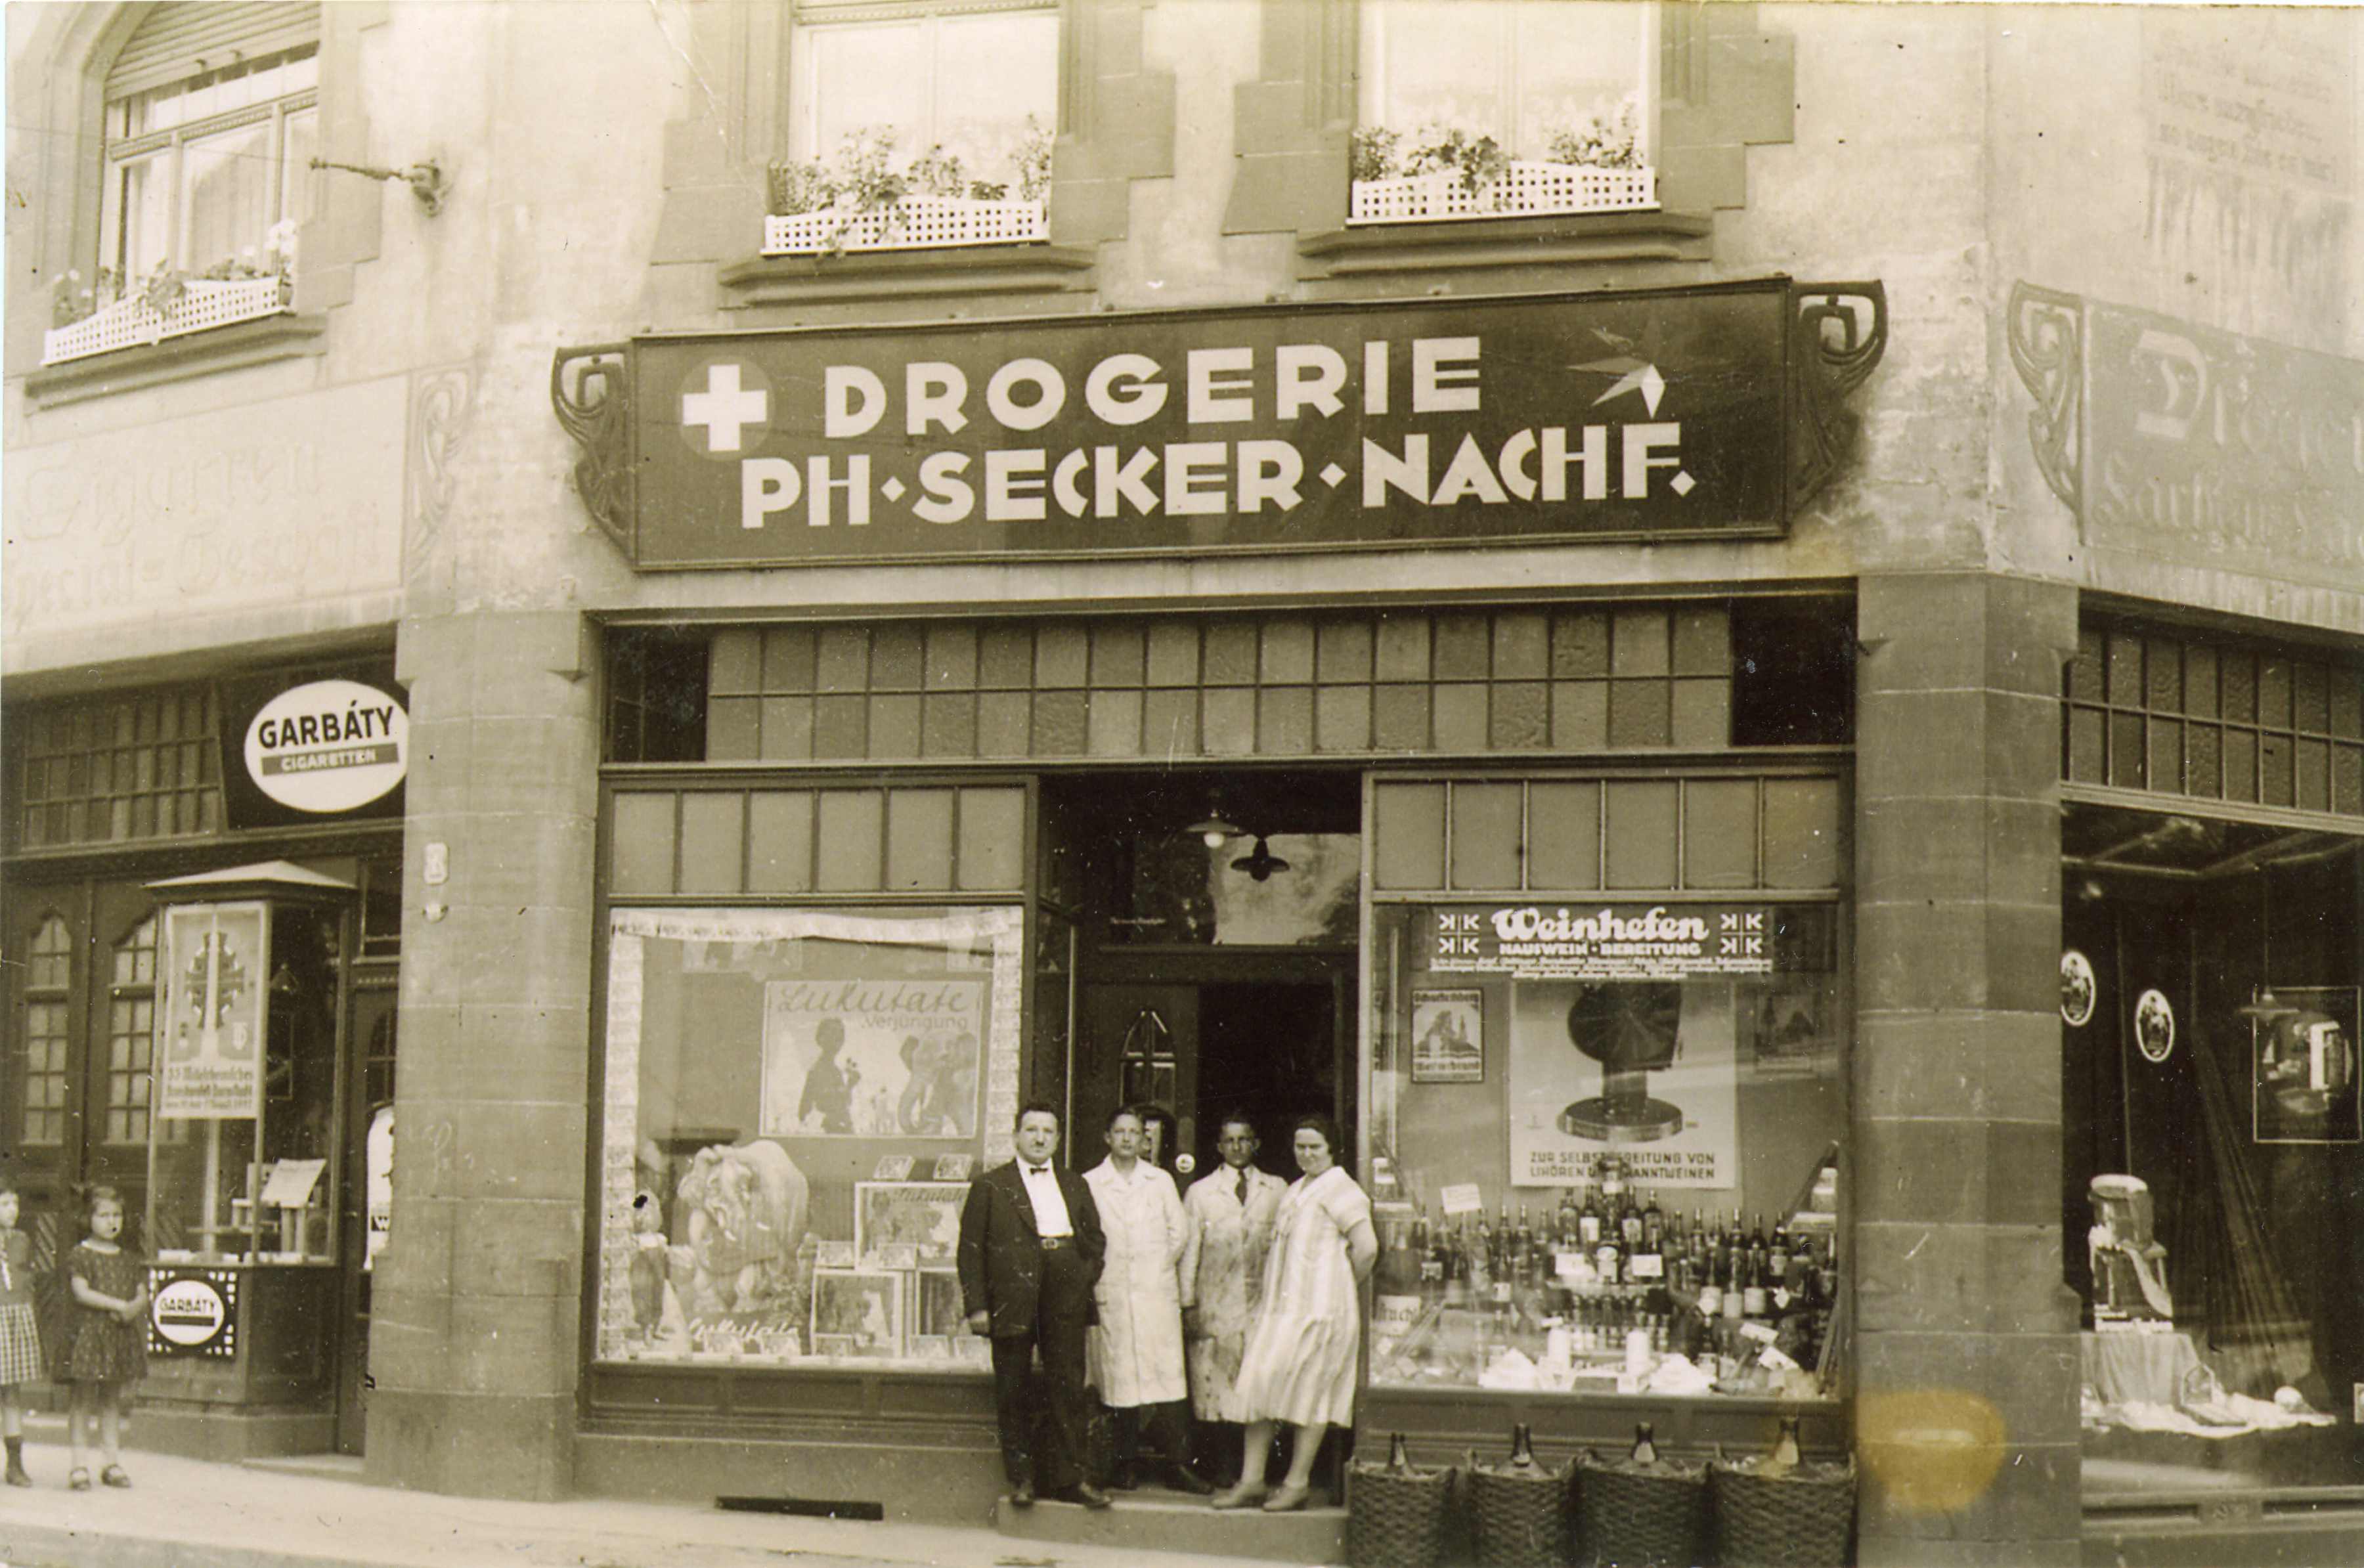 Drogerie Secker (1927)